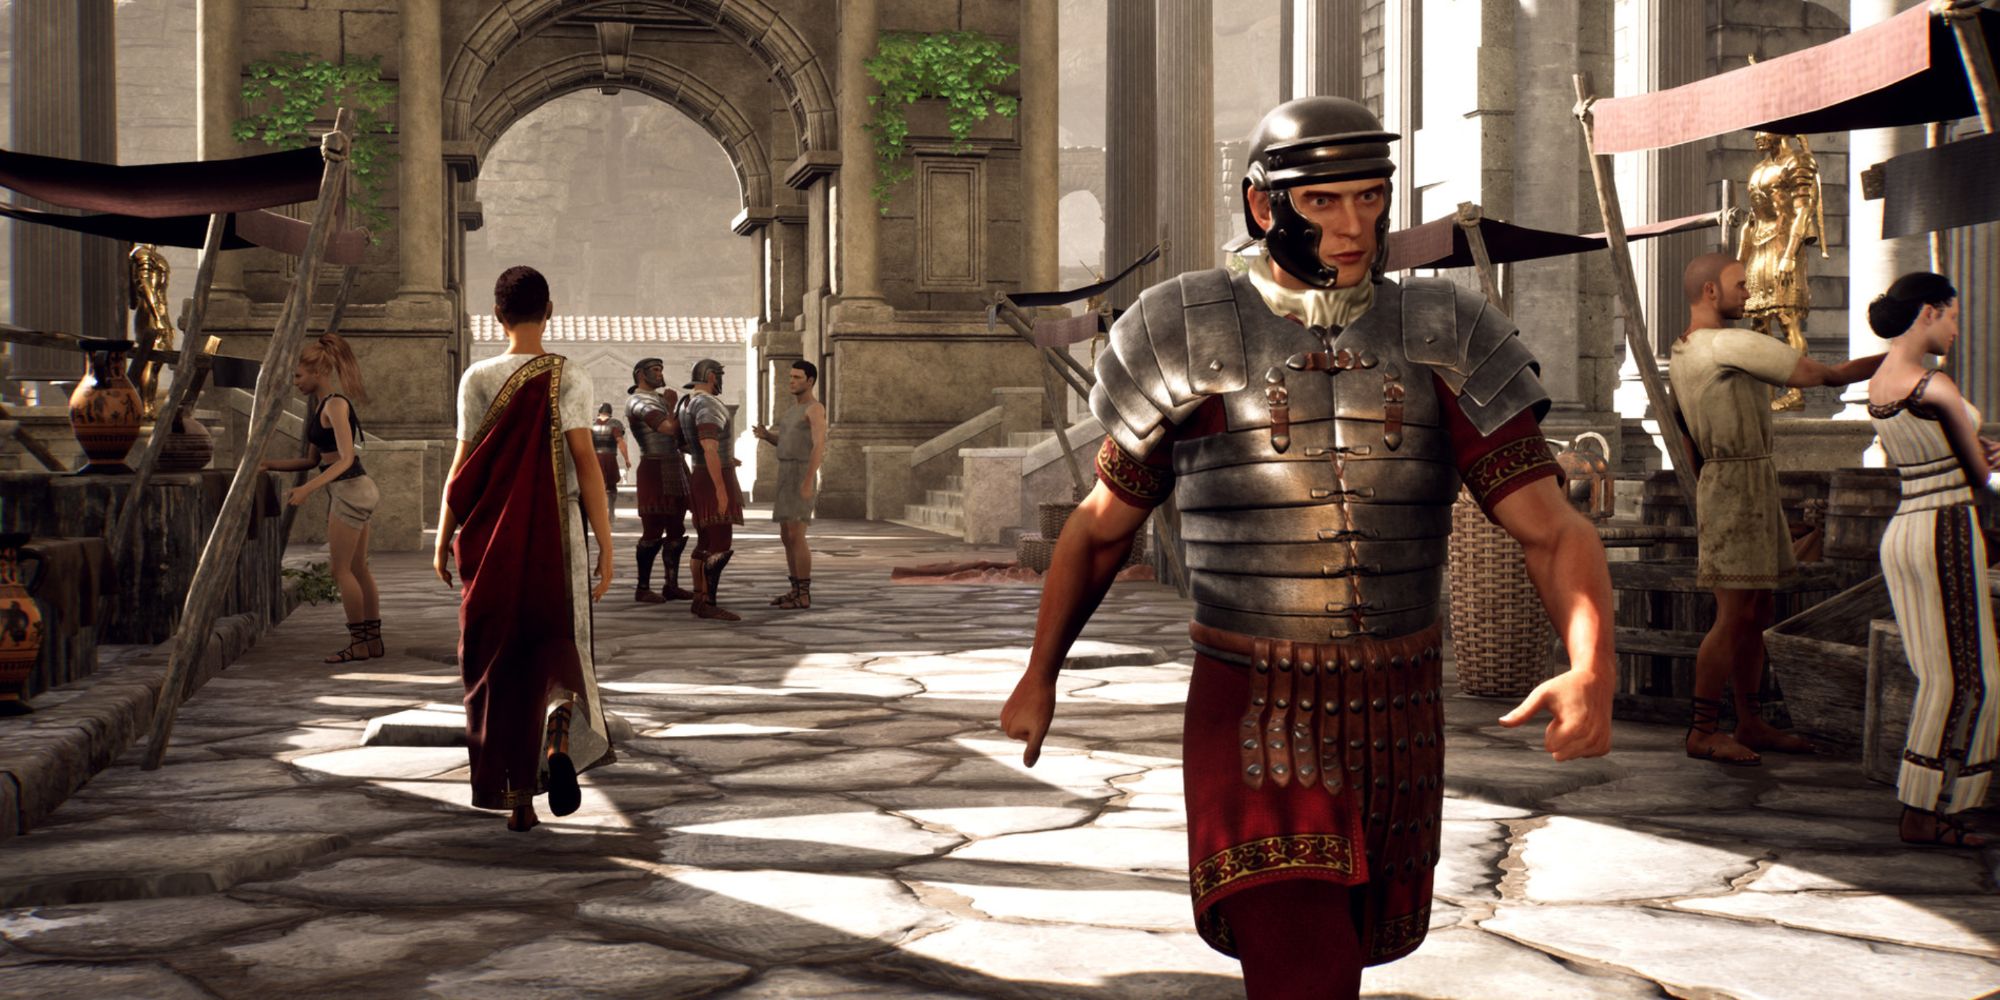 Roman guards patrol the market in The Forgotten City